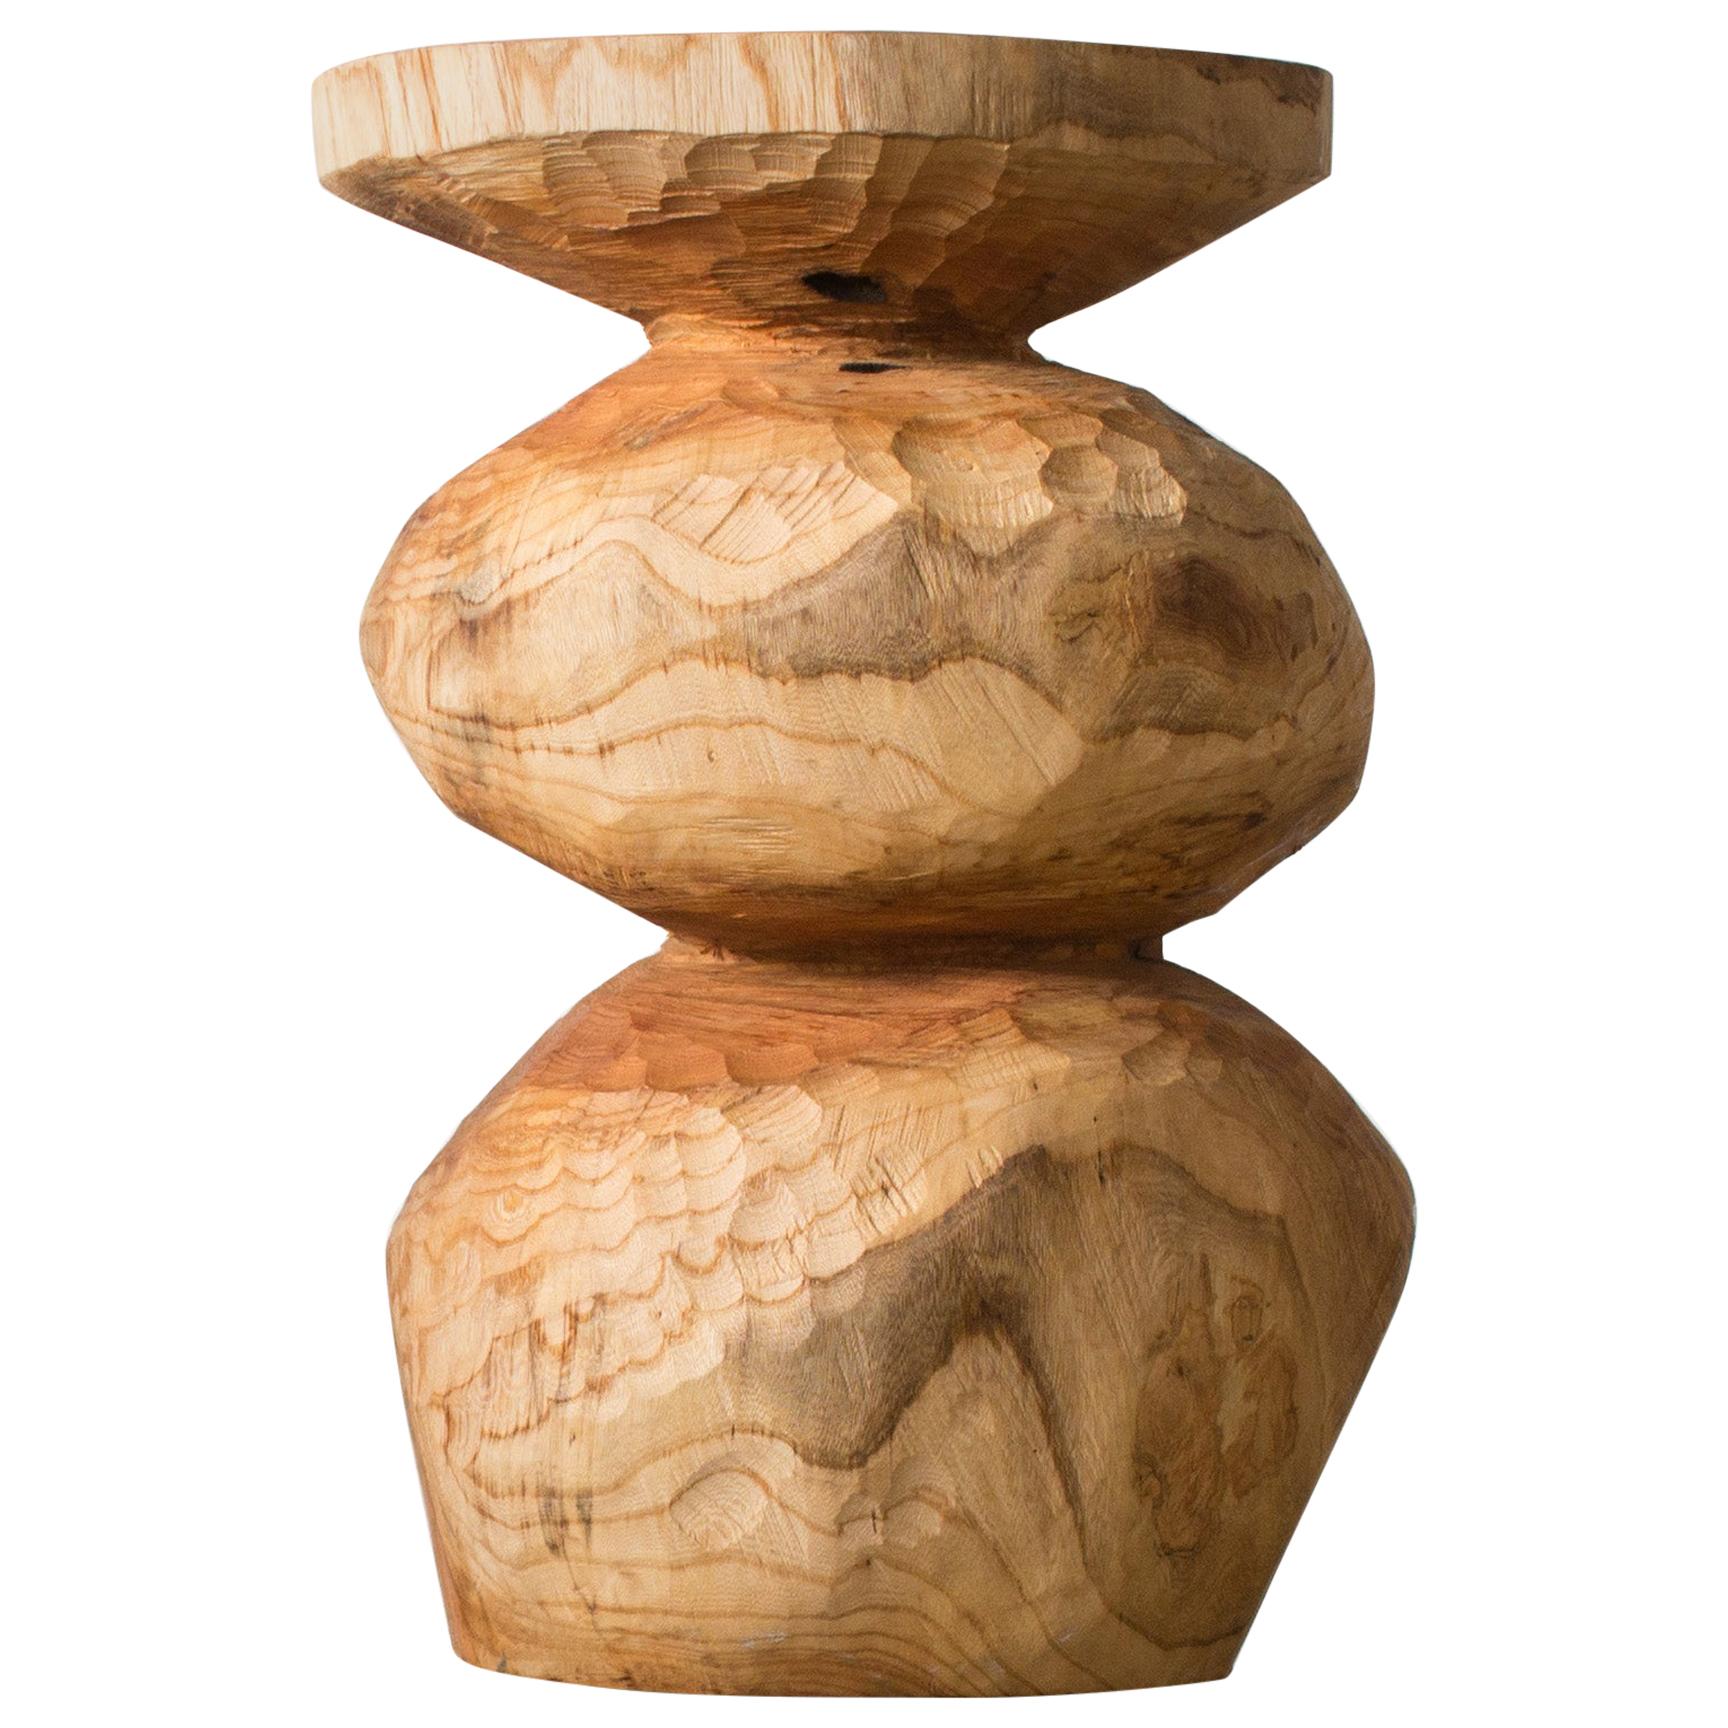 Hiroyuki Nishimura Furniture Sculptural Wood Stool10-09 Tribal Glamping